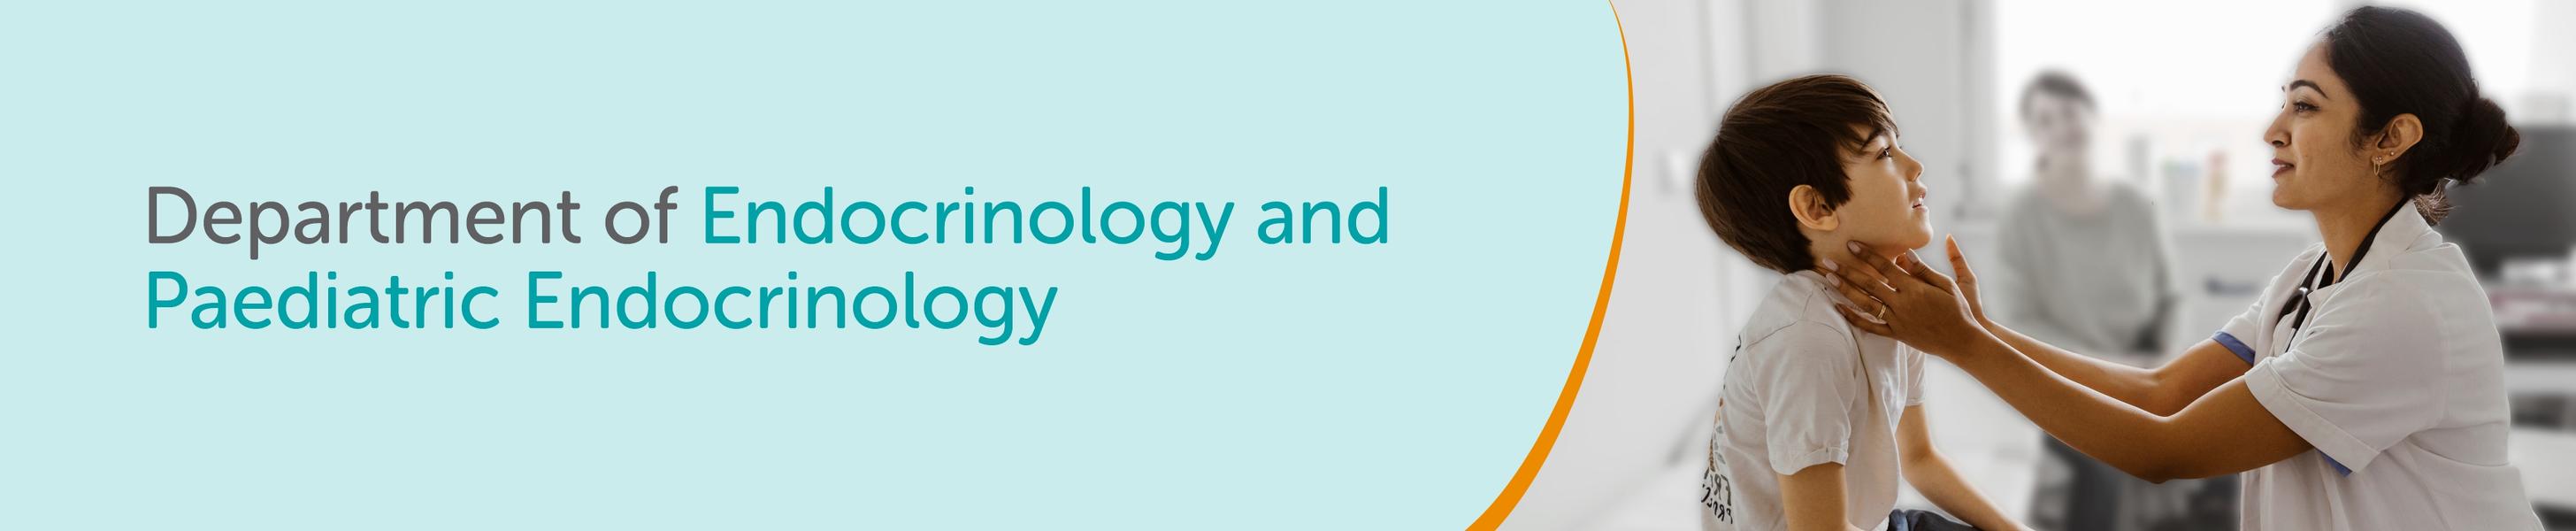 LBN Department of Endocrinology & Paediatric Endocrinology web Banner